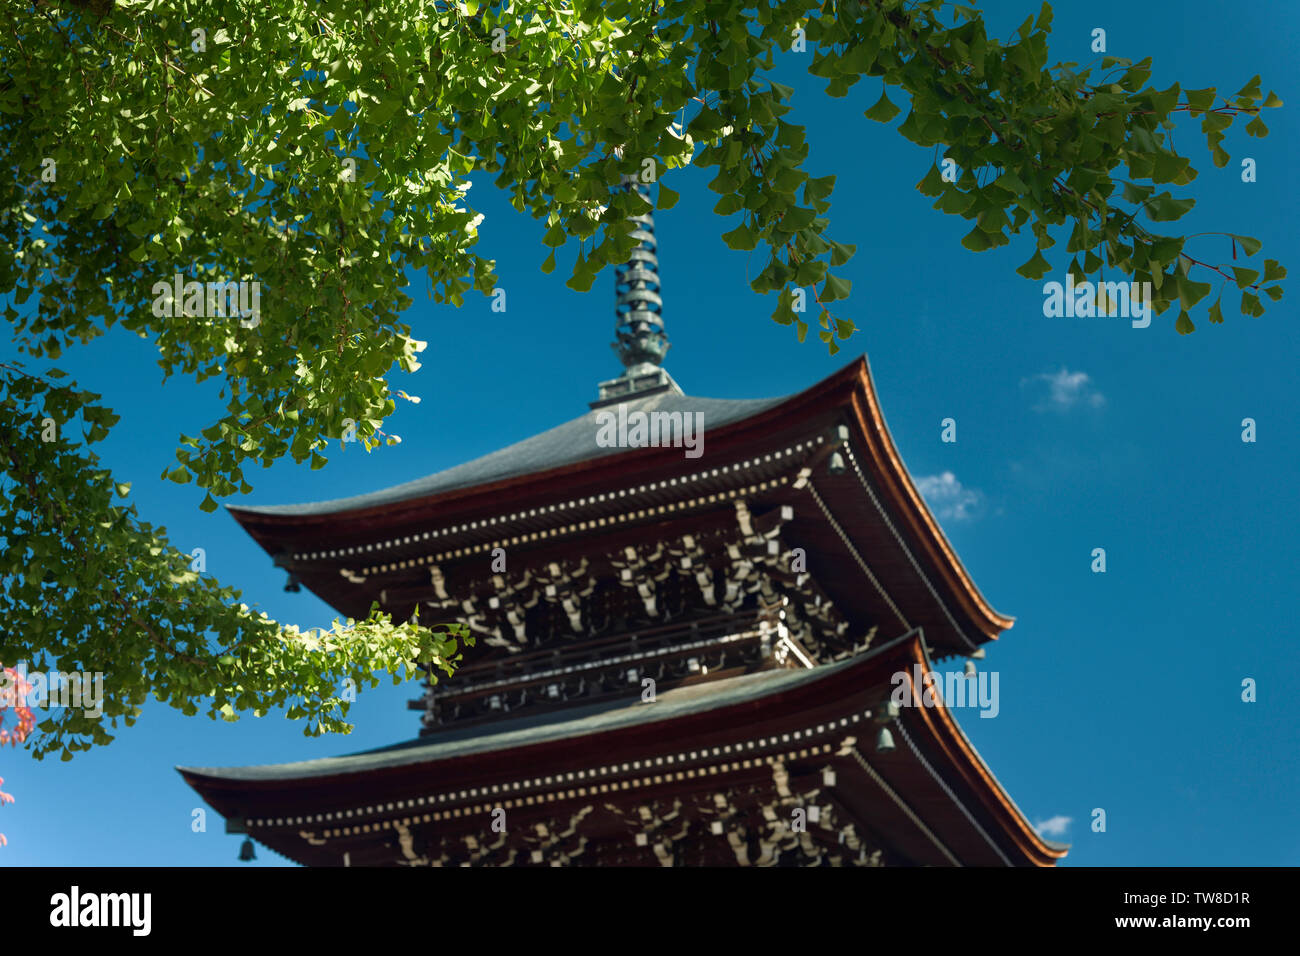 Hida Kokubunji Temple Pagoda under an old Ginkgo tree over blue sky in Takayama city, Gifu prefecture, Japan. Stock Photo